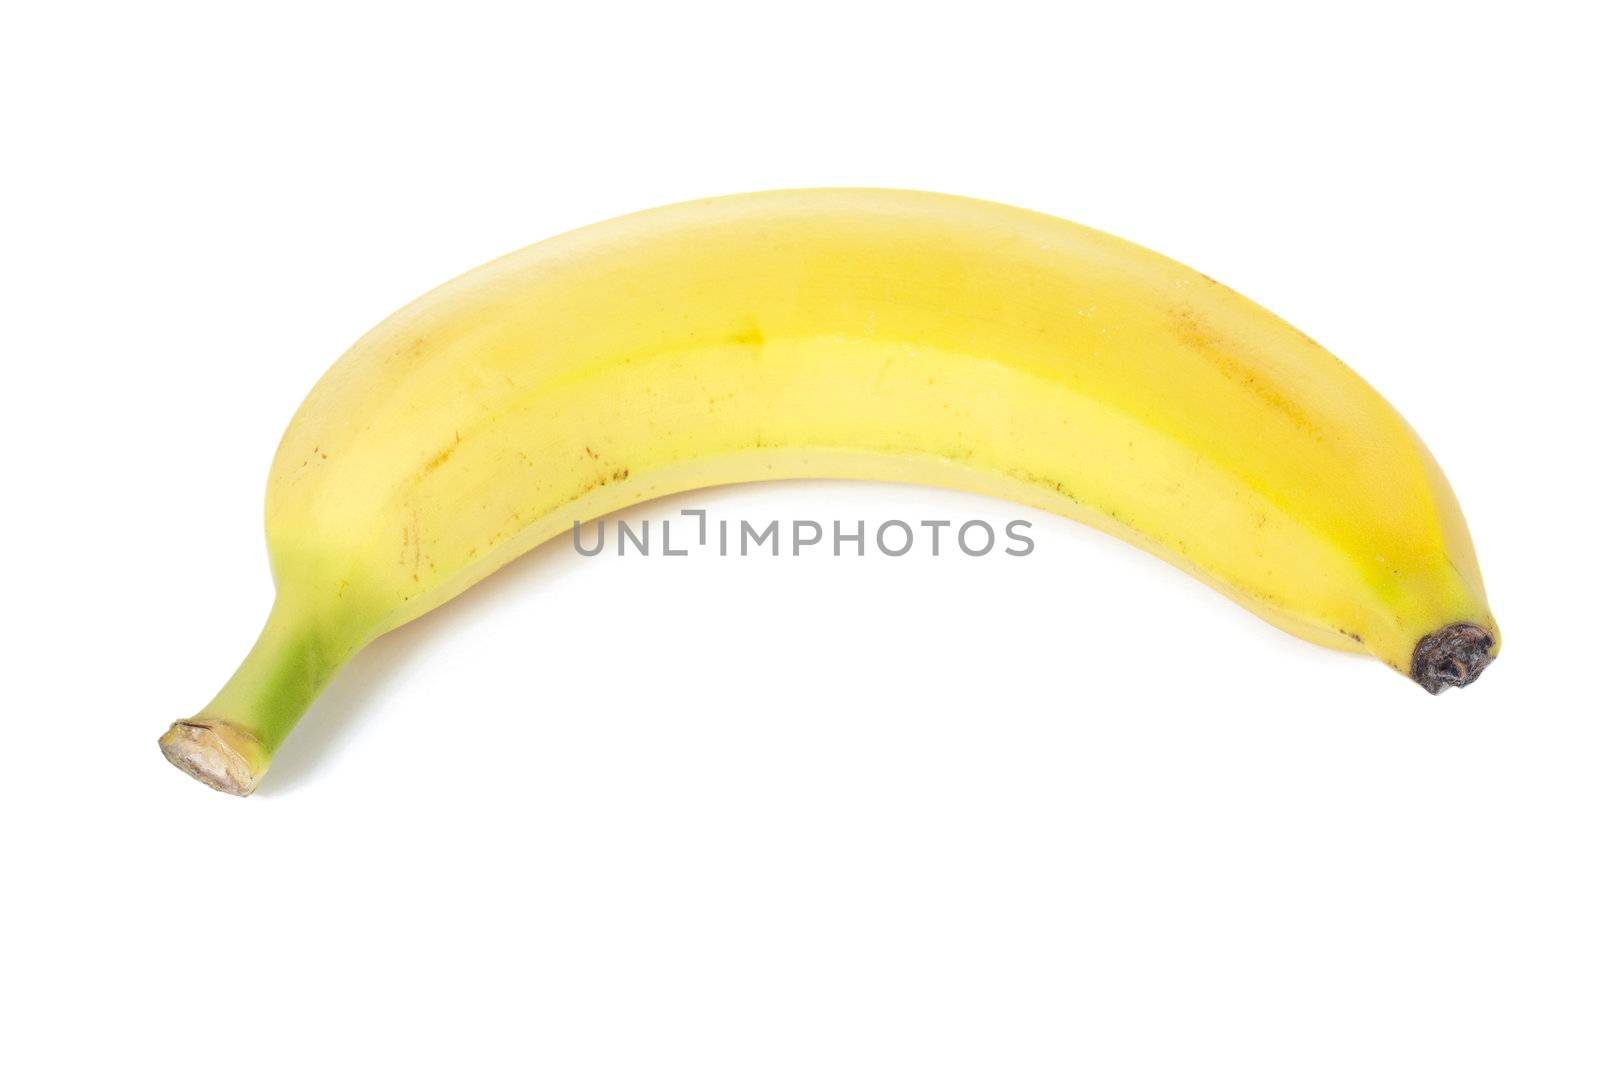 Ripe banana in a horizontal image